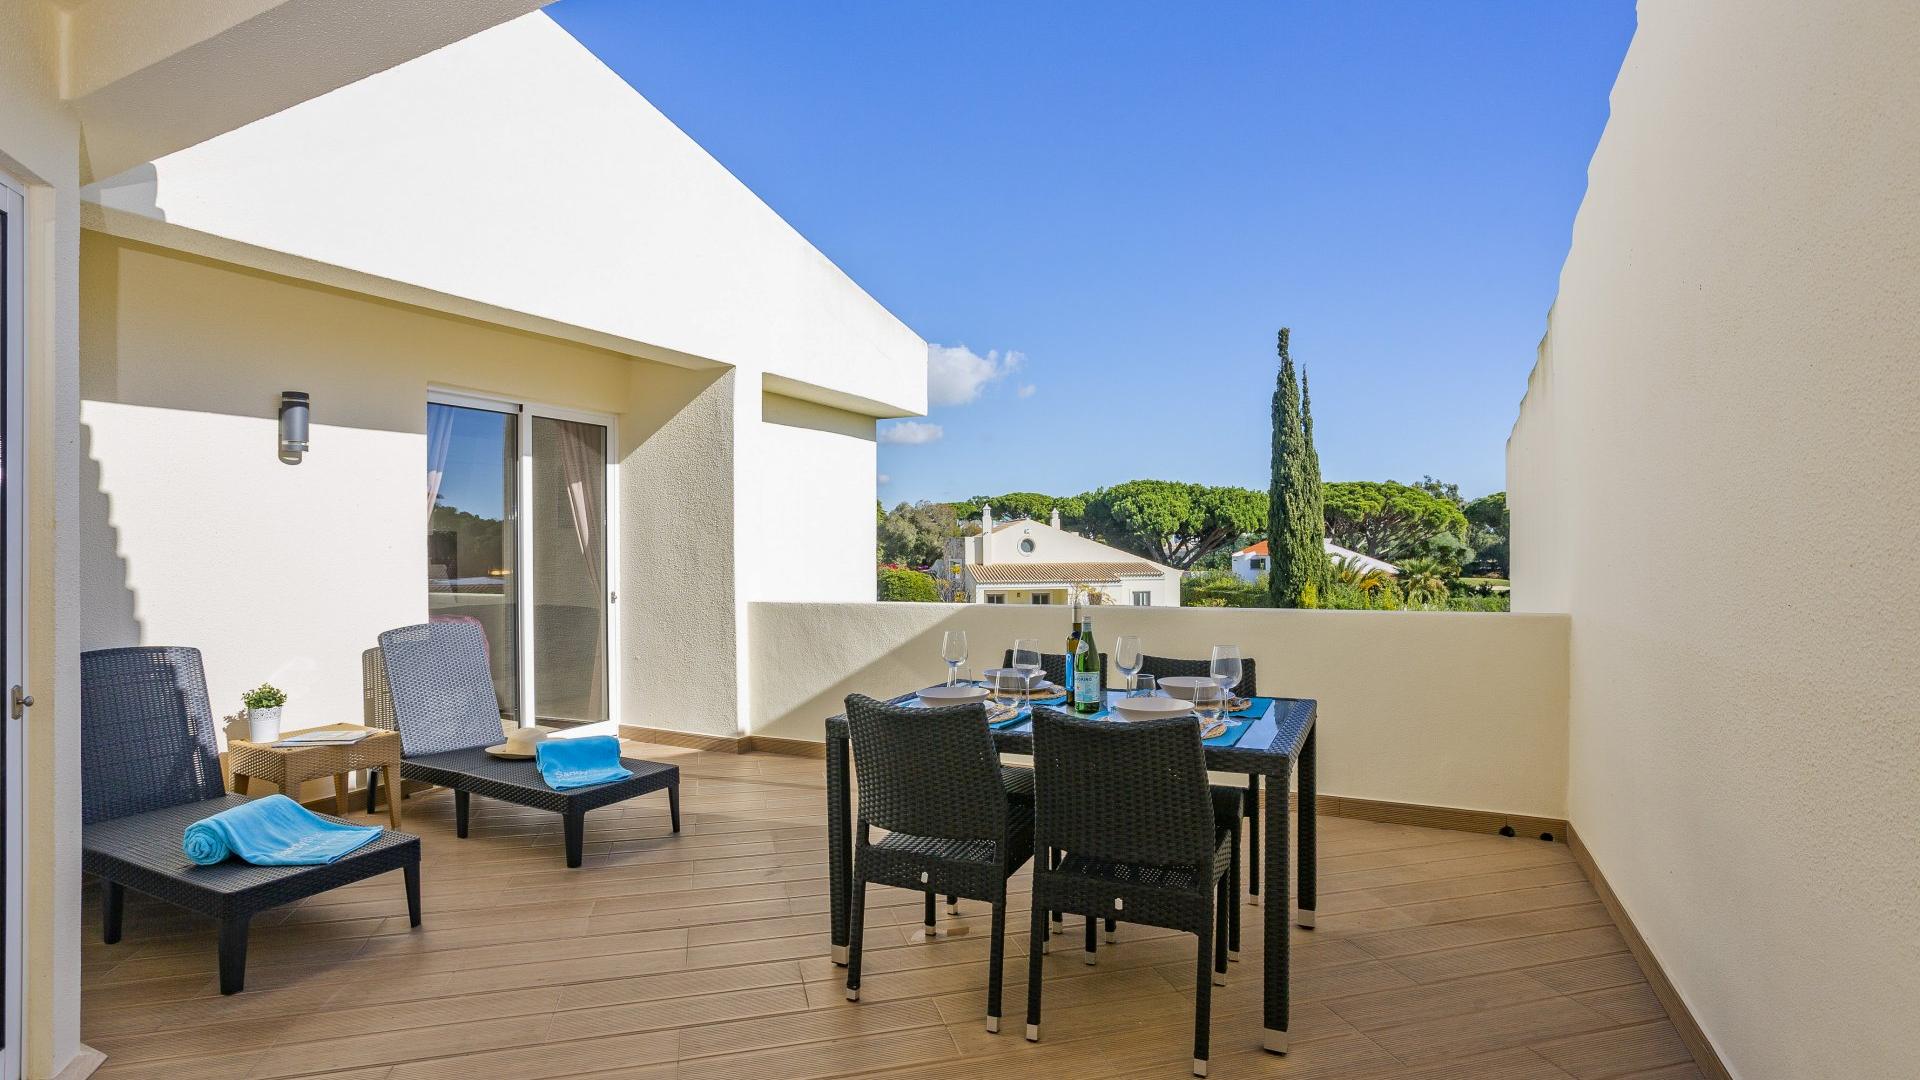 Apartmento Begonia - Jardins do Golfe, Vale do Lobo, Algarve - Apartment_Begonia_Outdoors_3.jpg